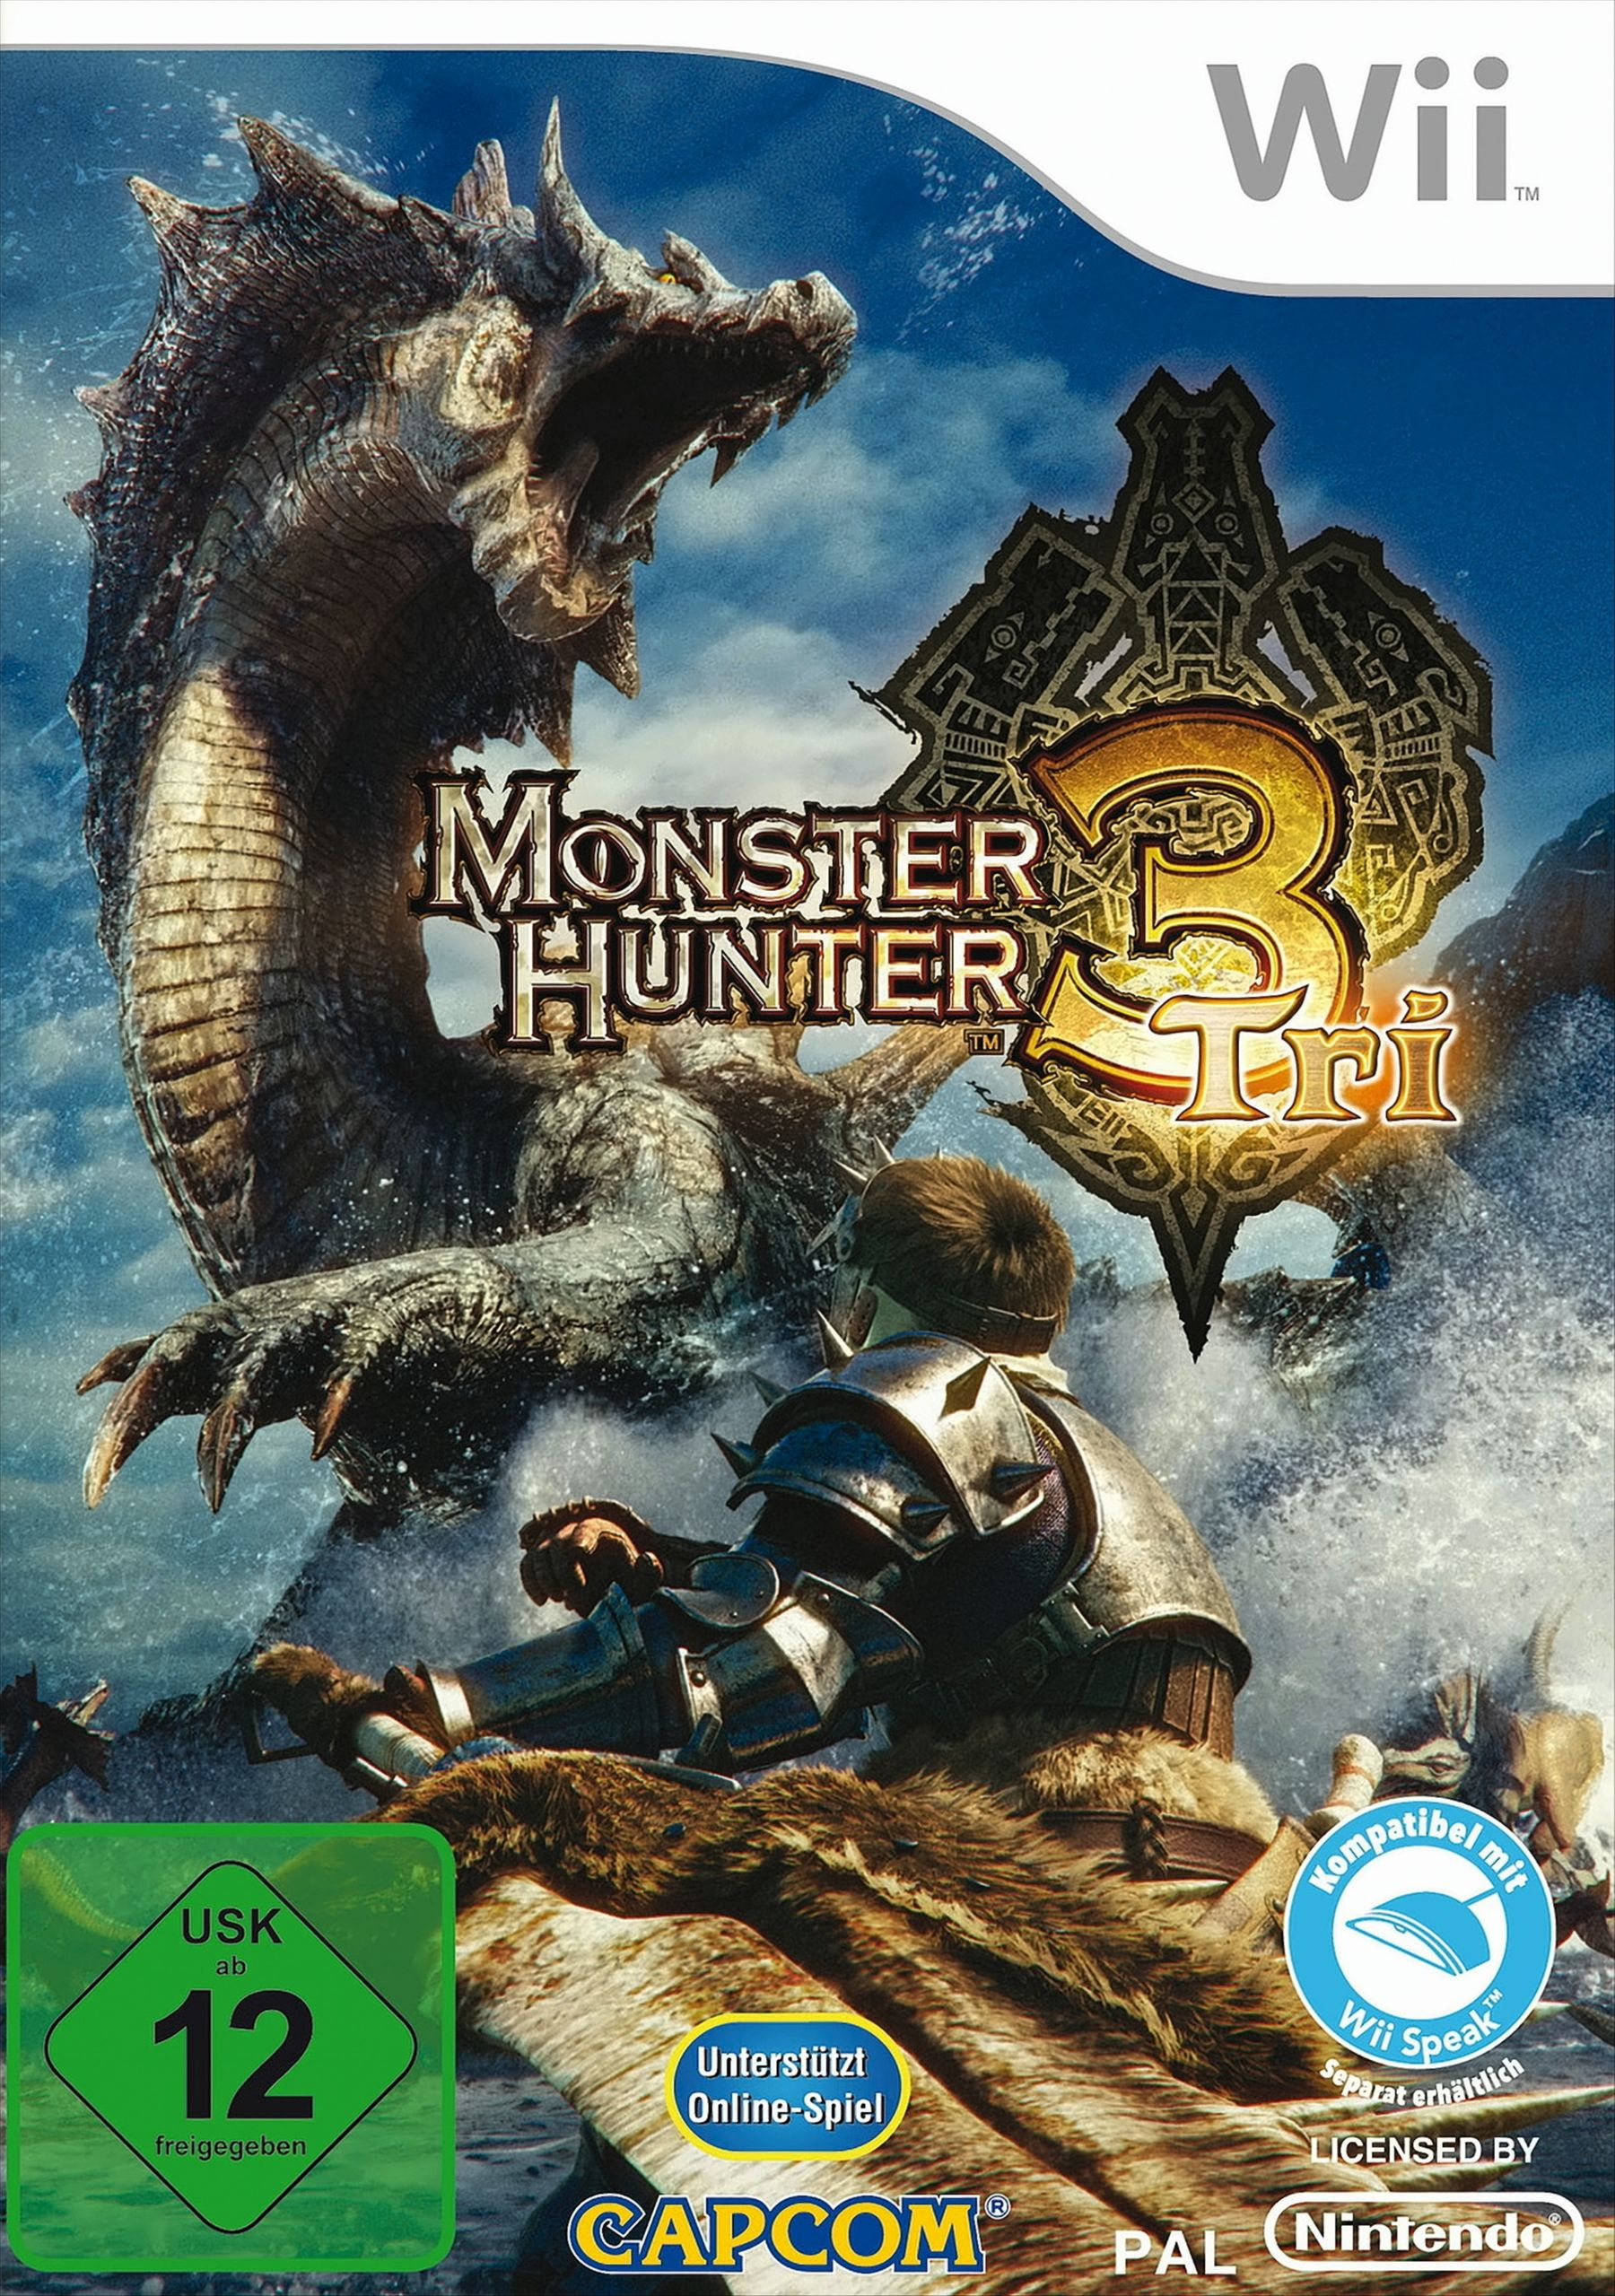 Wii] [Nintendo Monster Hunter - Tri